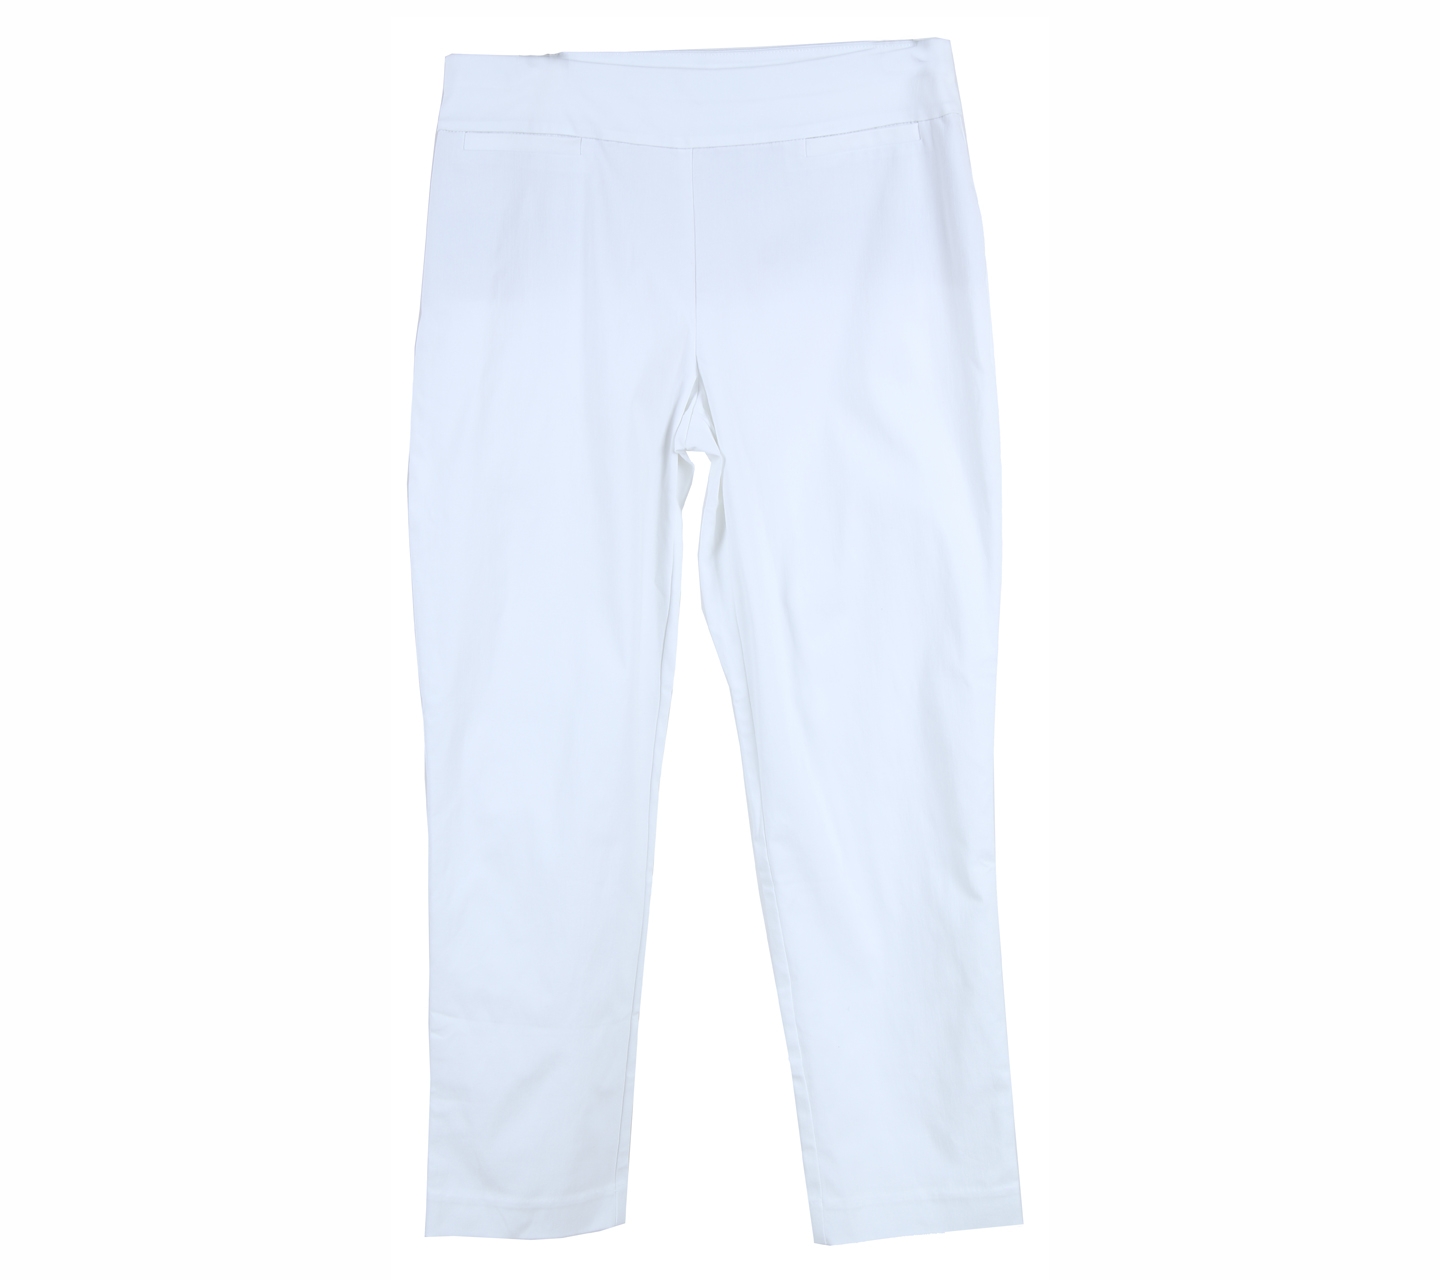 Talbots White Pants